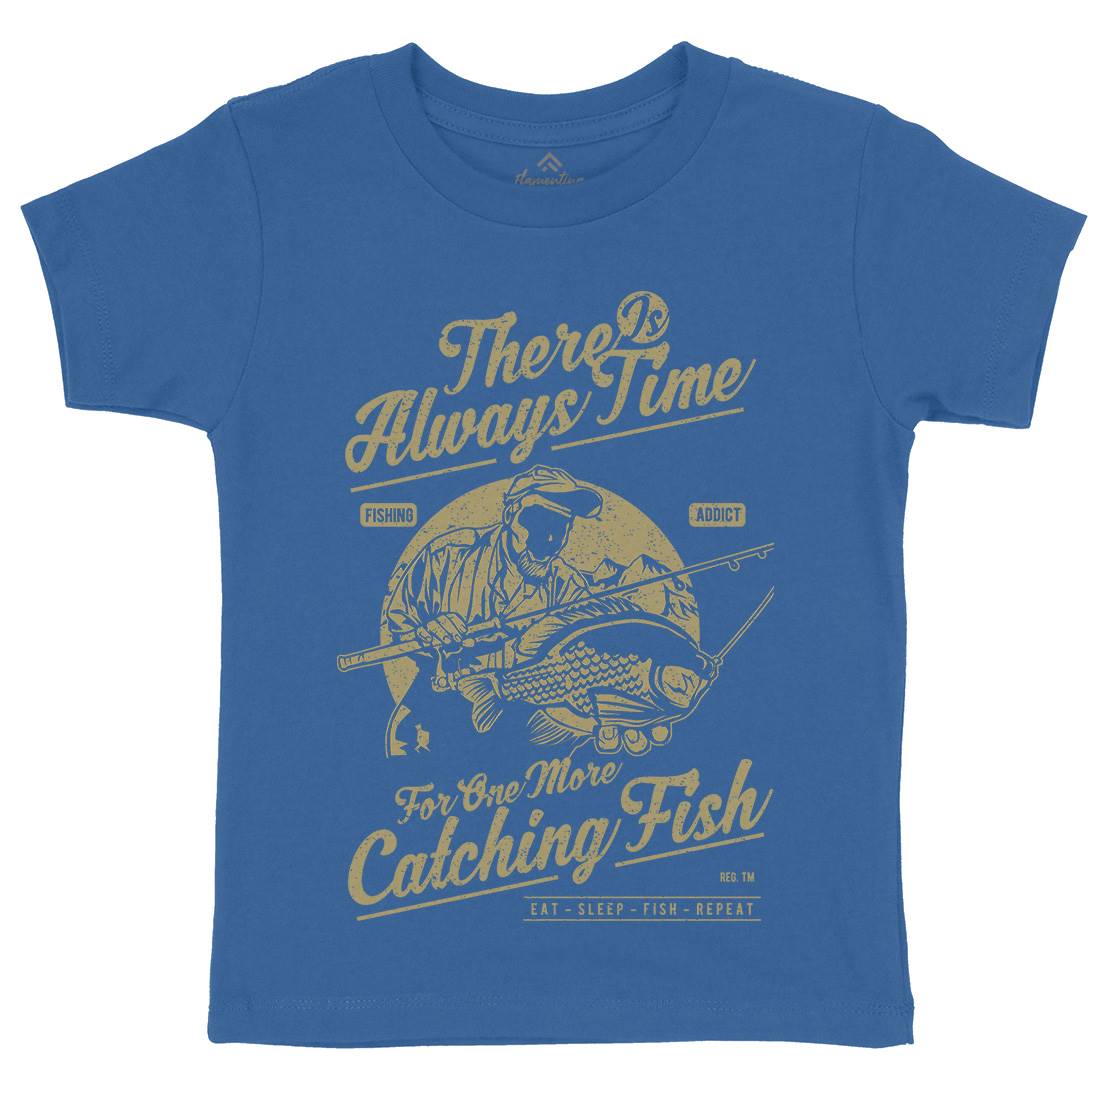 One More Catching Kids Organic Crew Neck T-Shirt Fishing A731